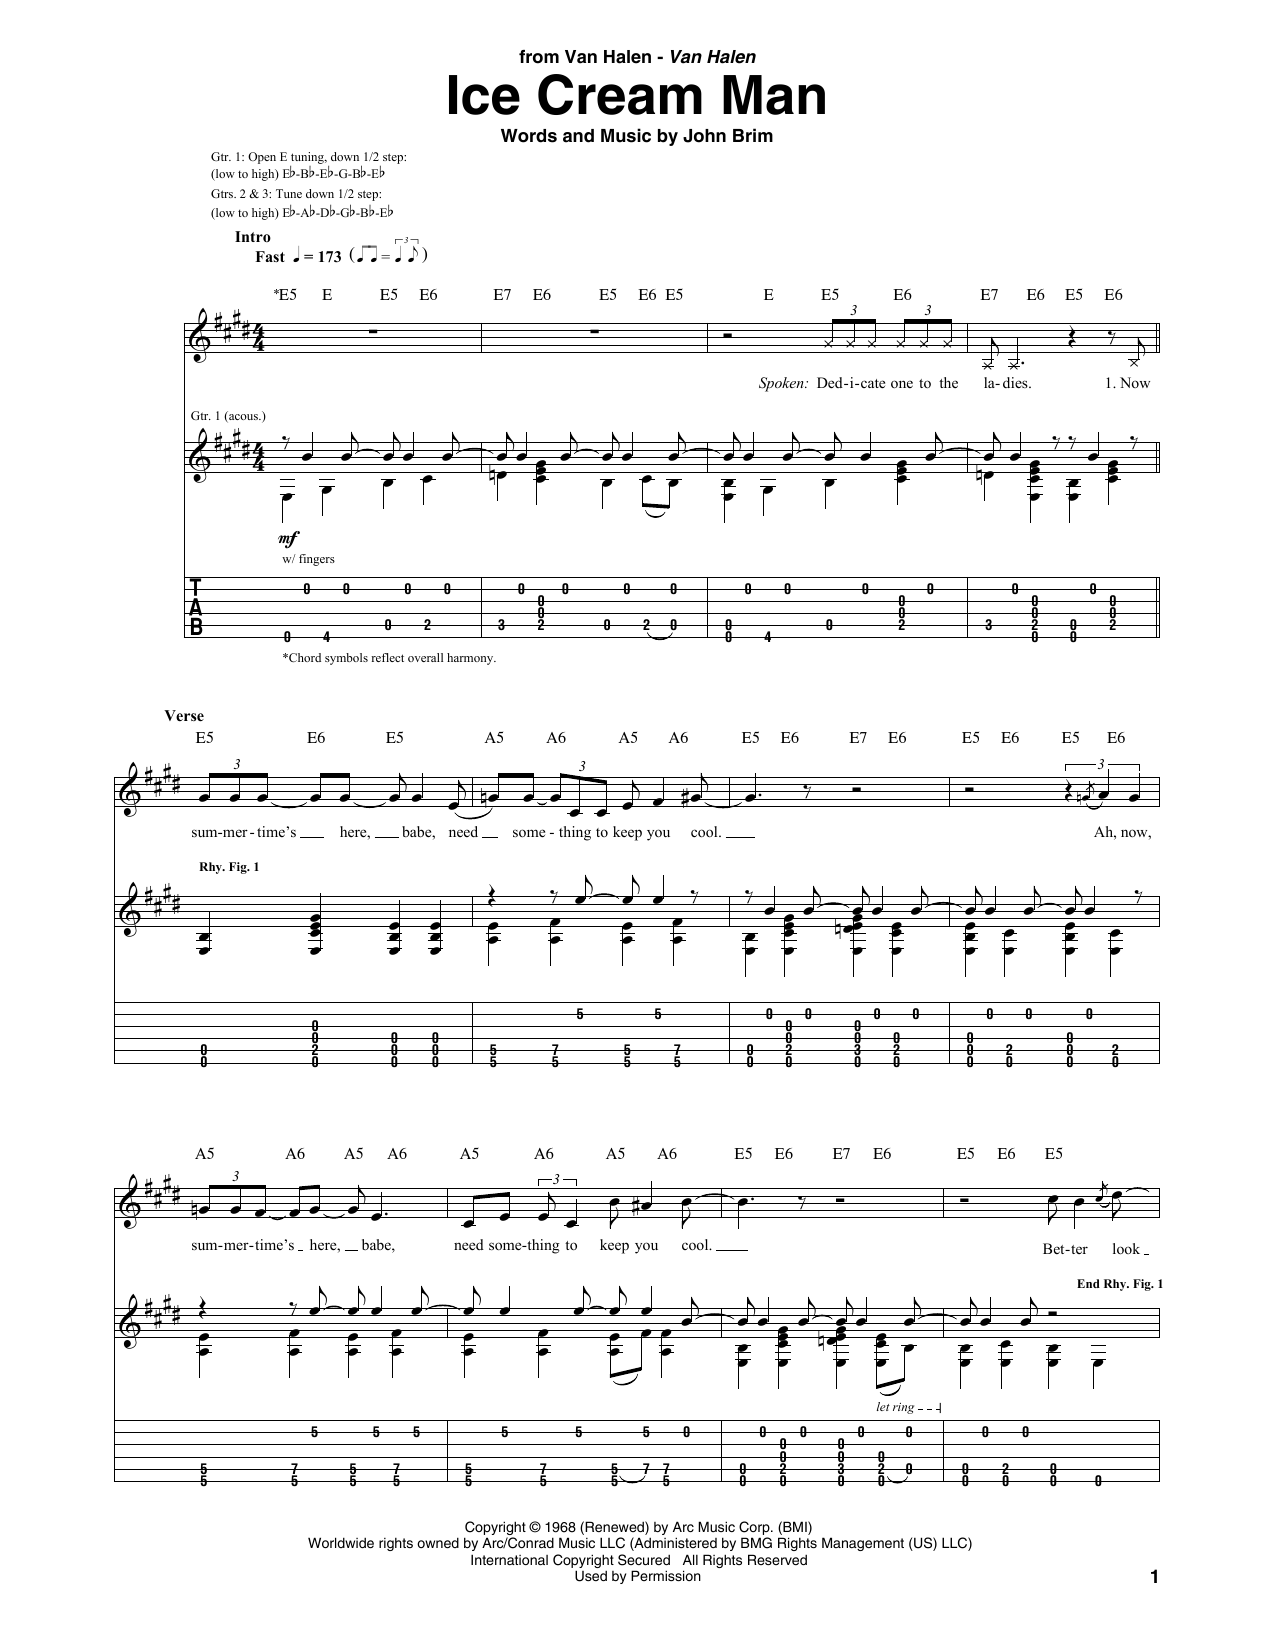 Van Halen Ice Cream Man Sheet Music Notes & Chords for Guitar Tab - Download or Print PDF